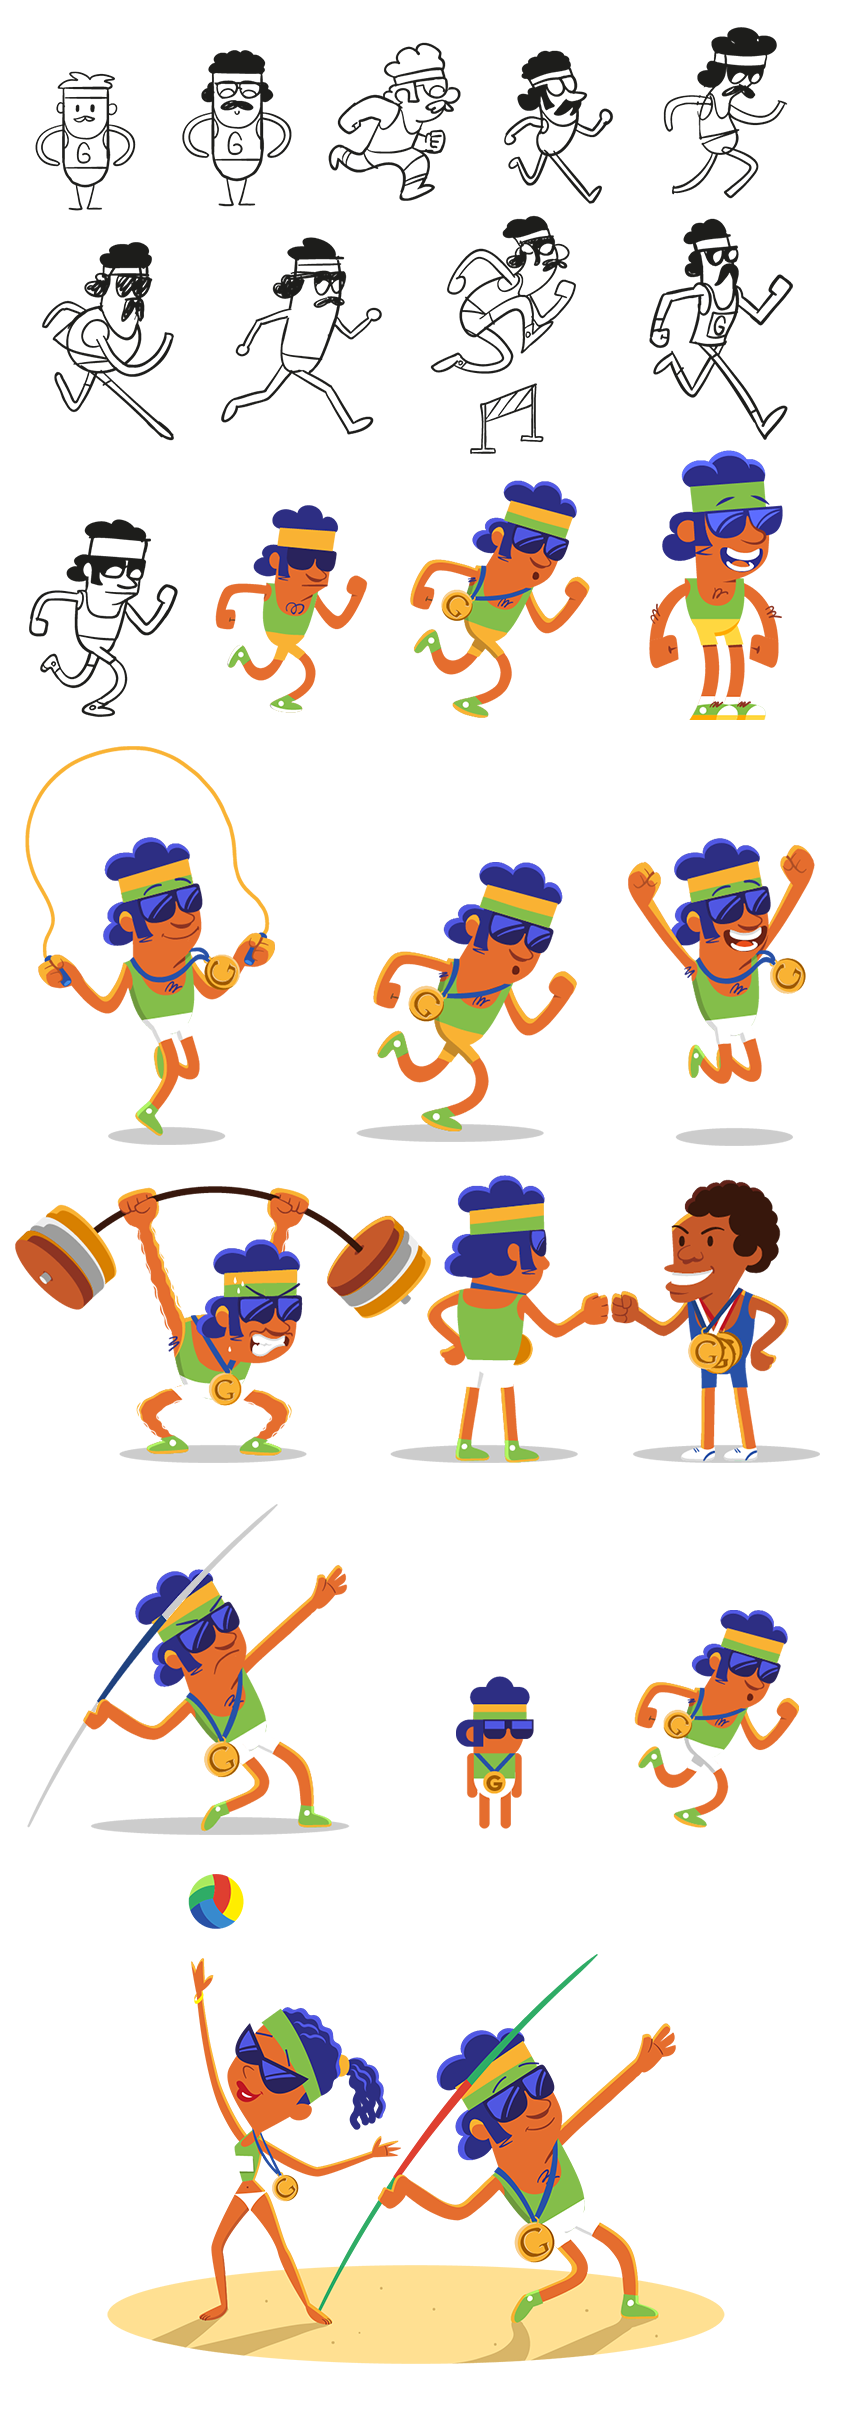 obrasilinteirojoga google Olympics gamedesign mediamonks Brazil Platform sports Mascottes